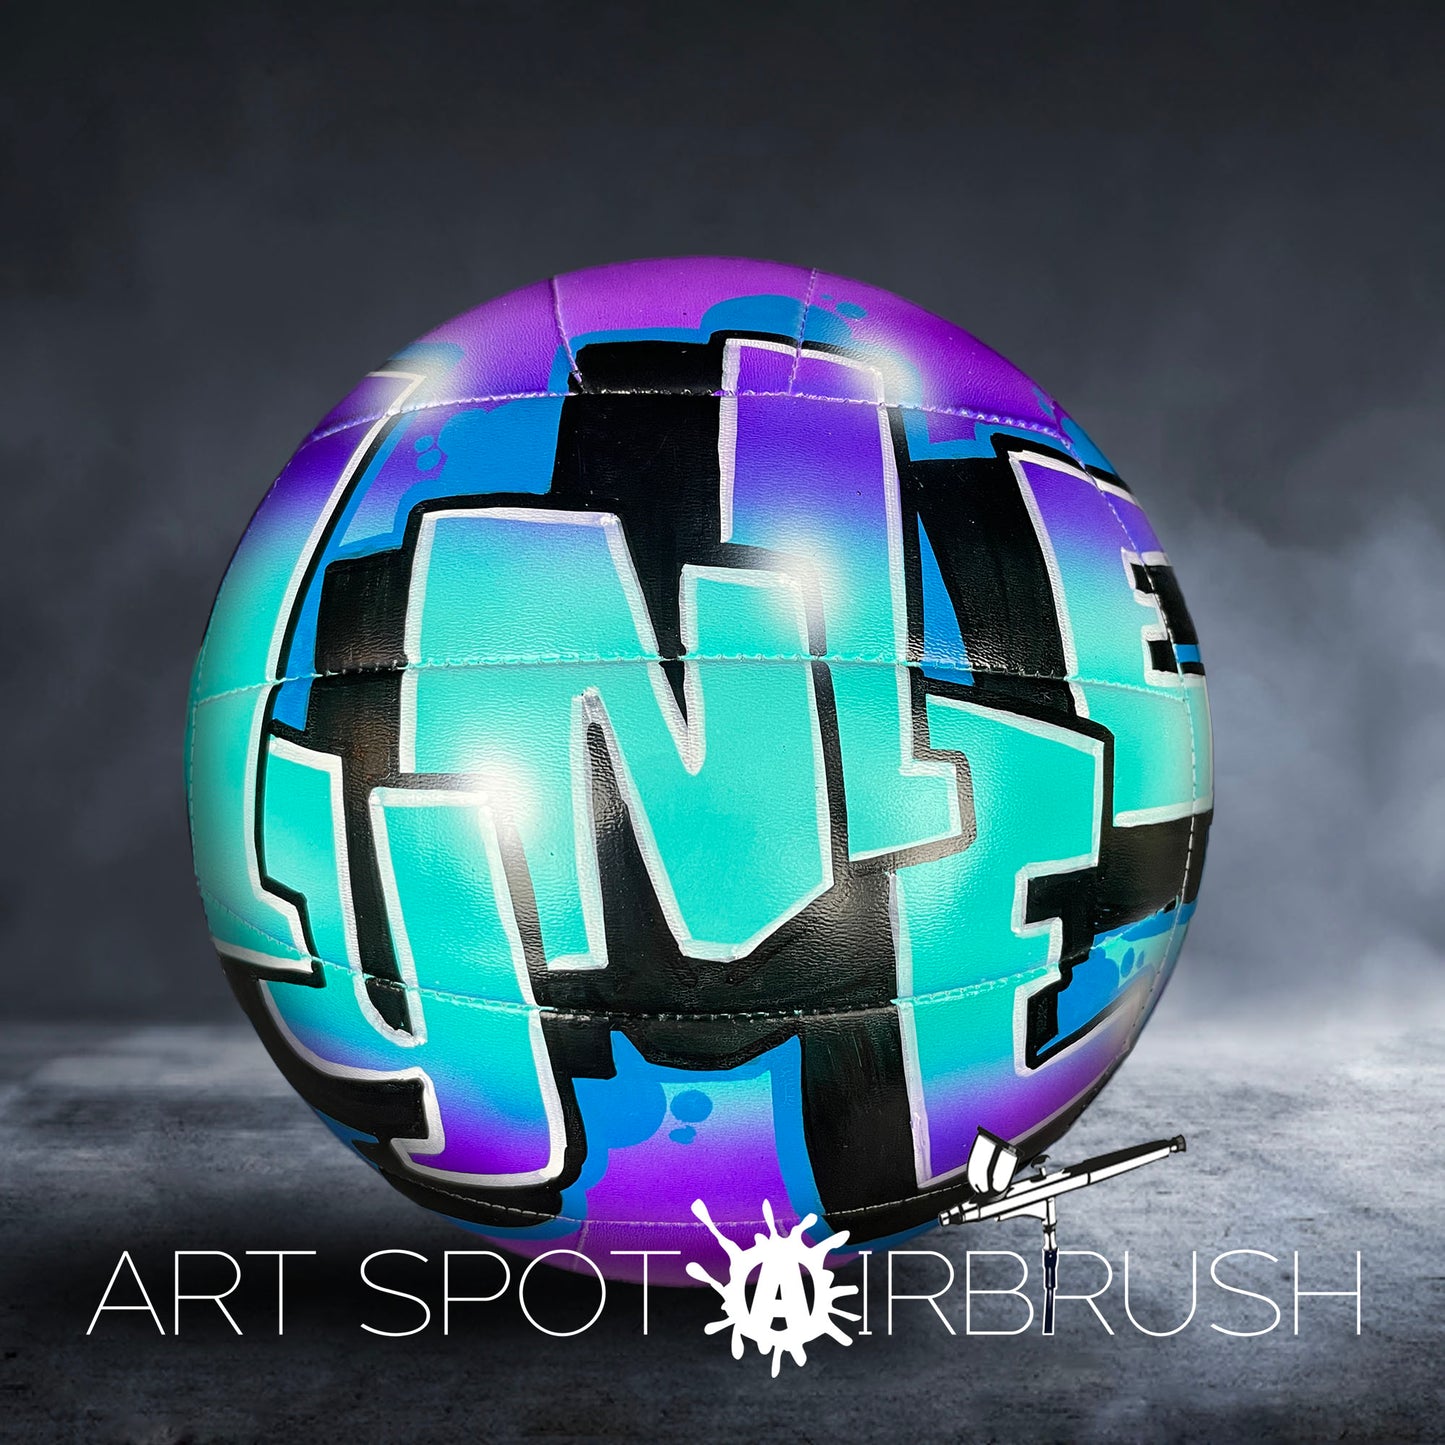 Personalized Volleyball with Graffiti Art